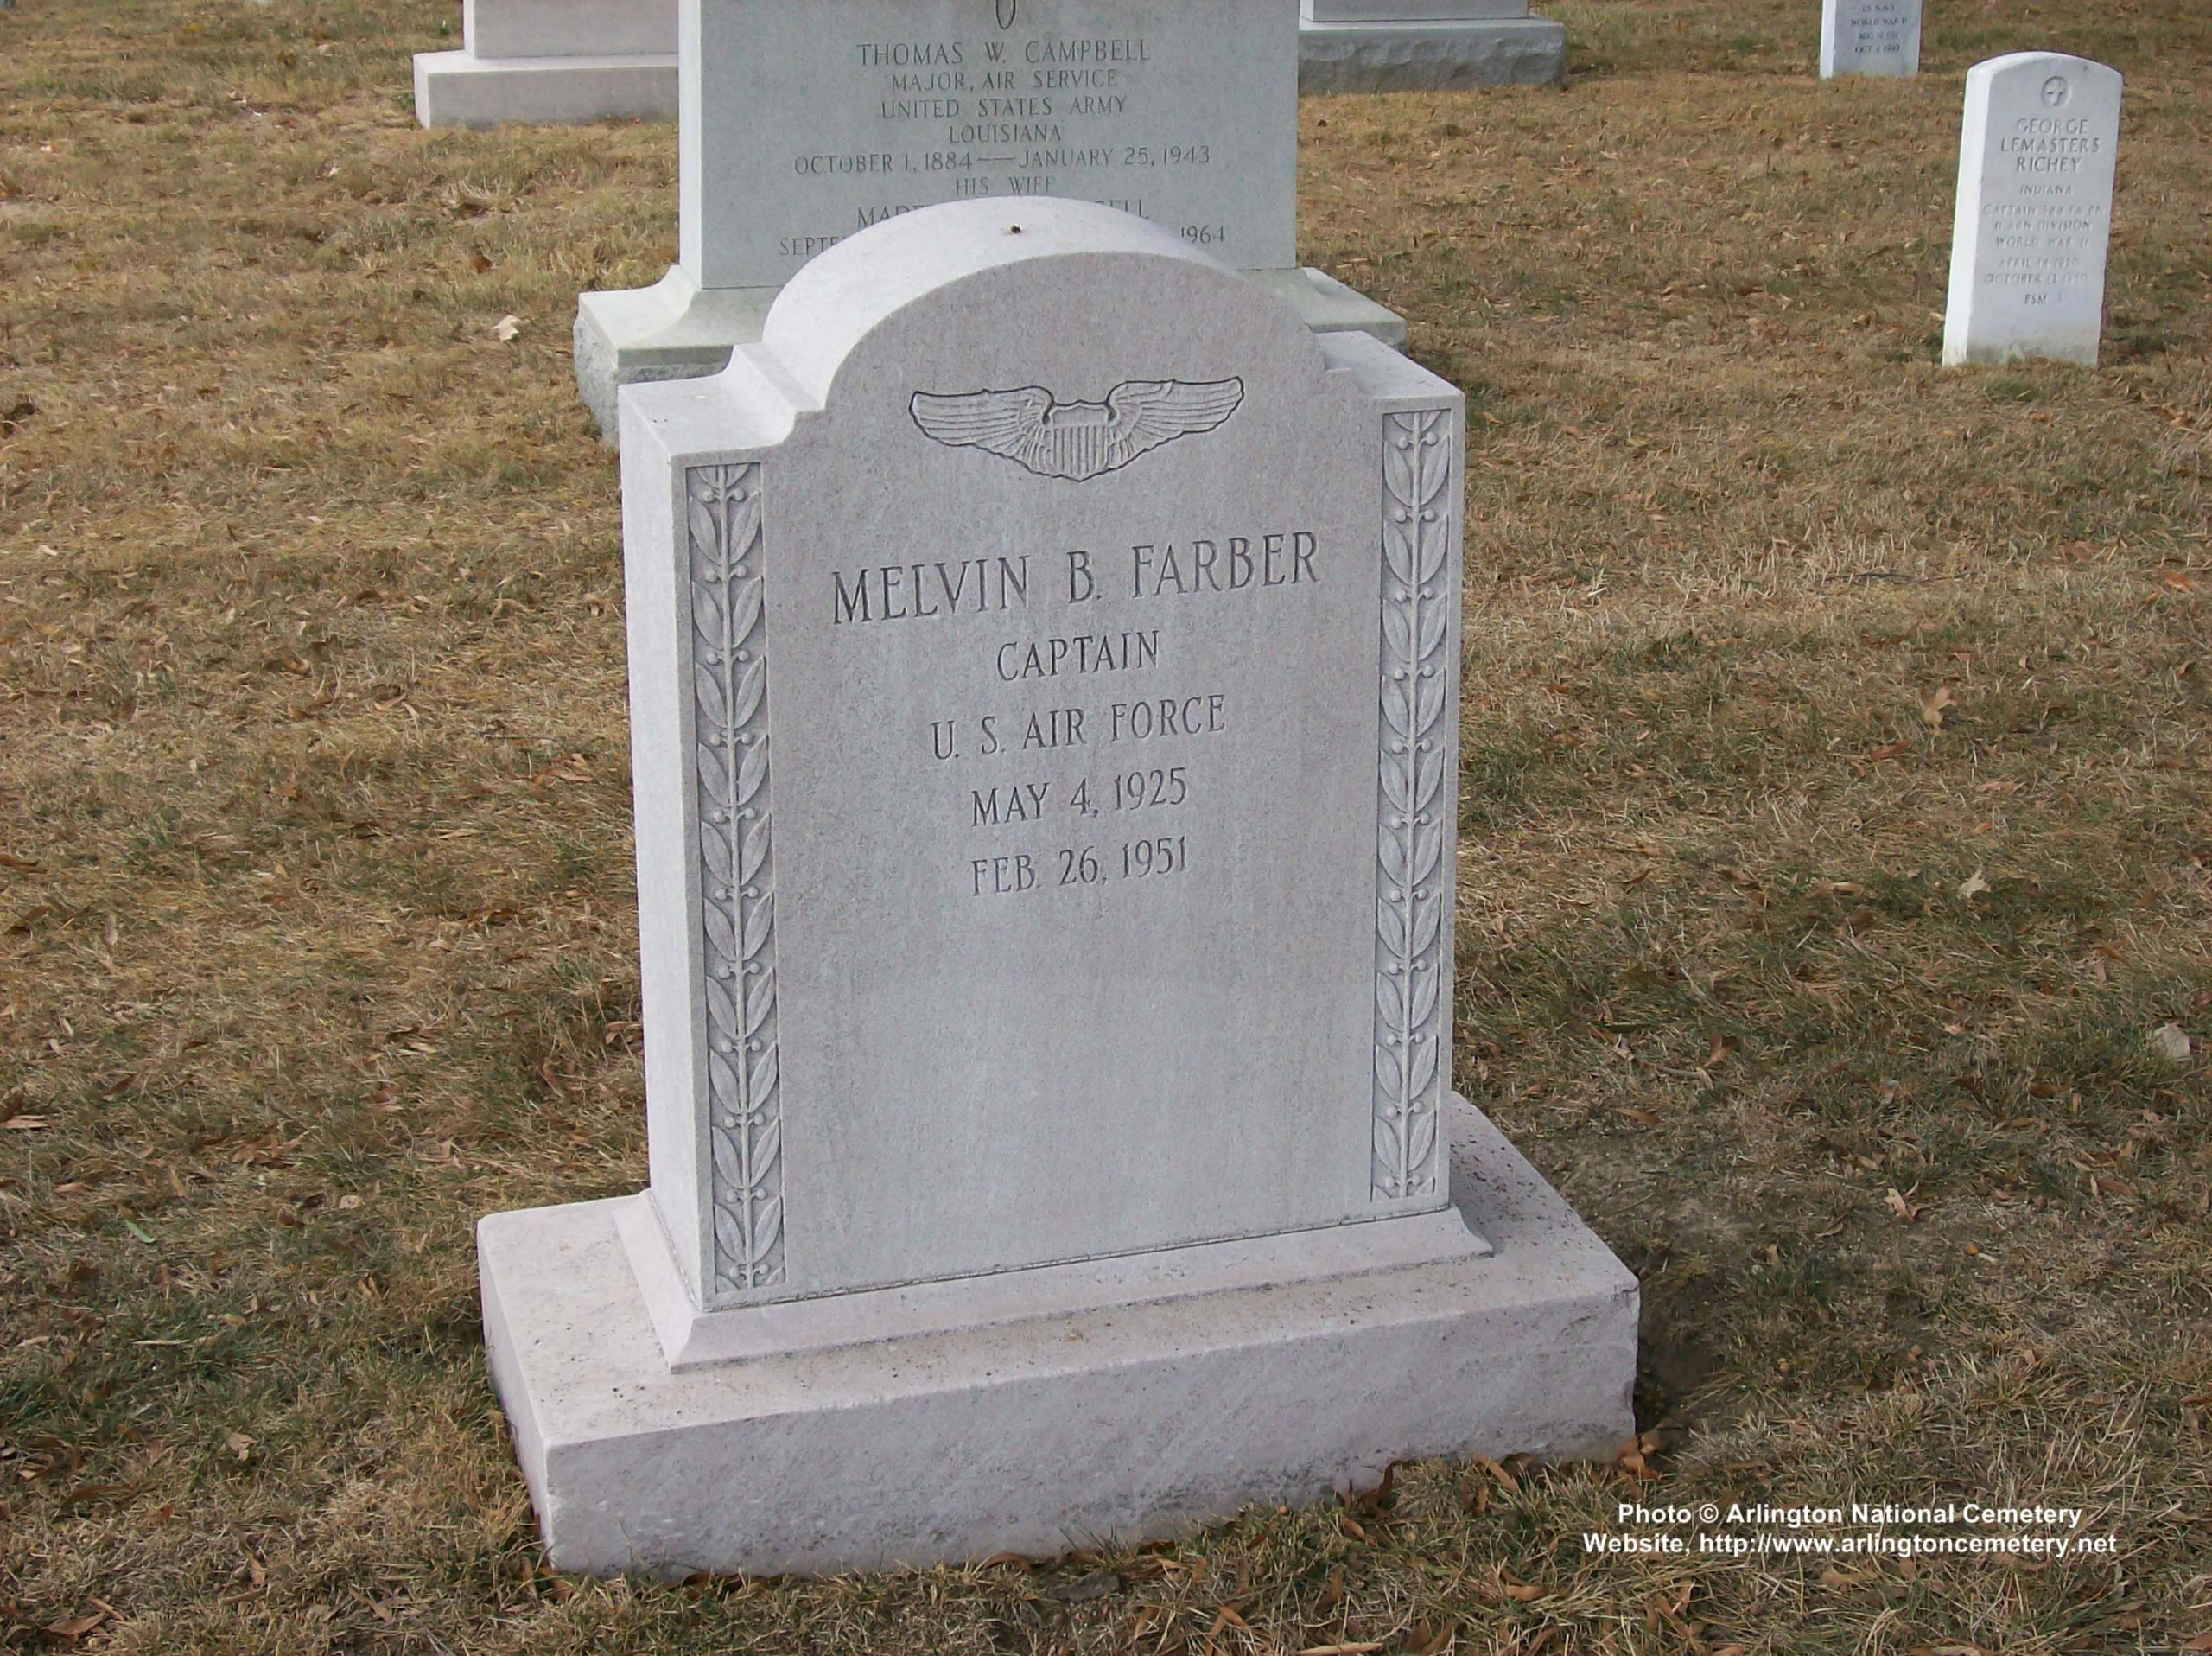 mbfarber-gravesite-photo-october-2007-001